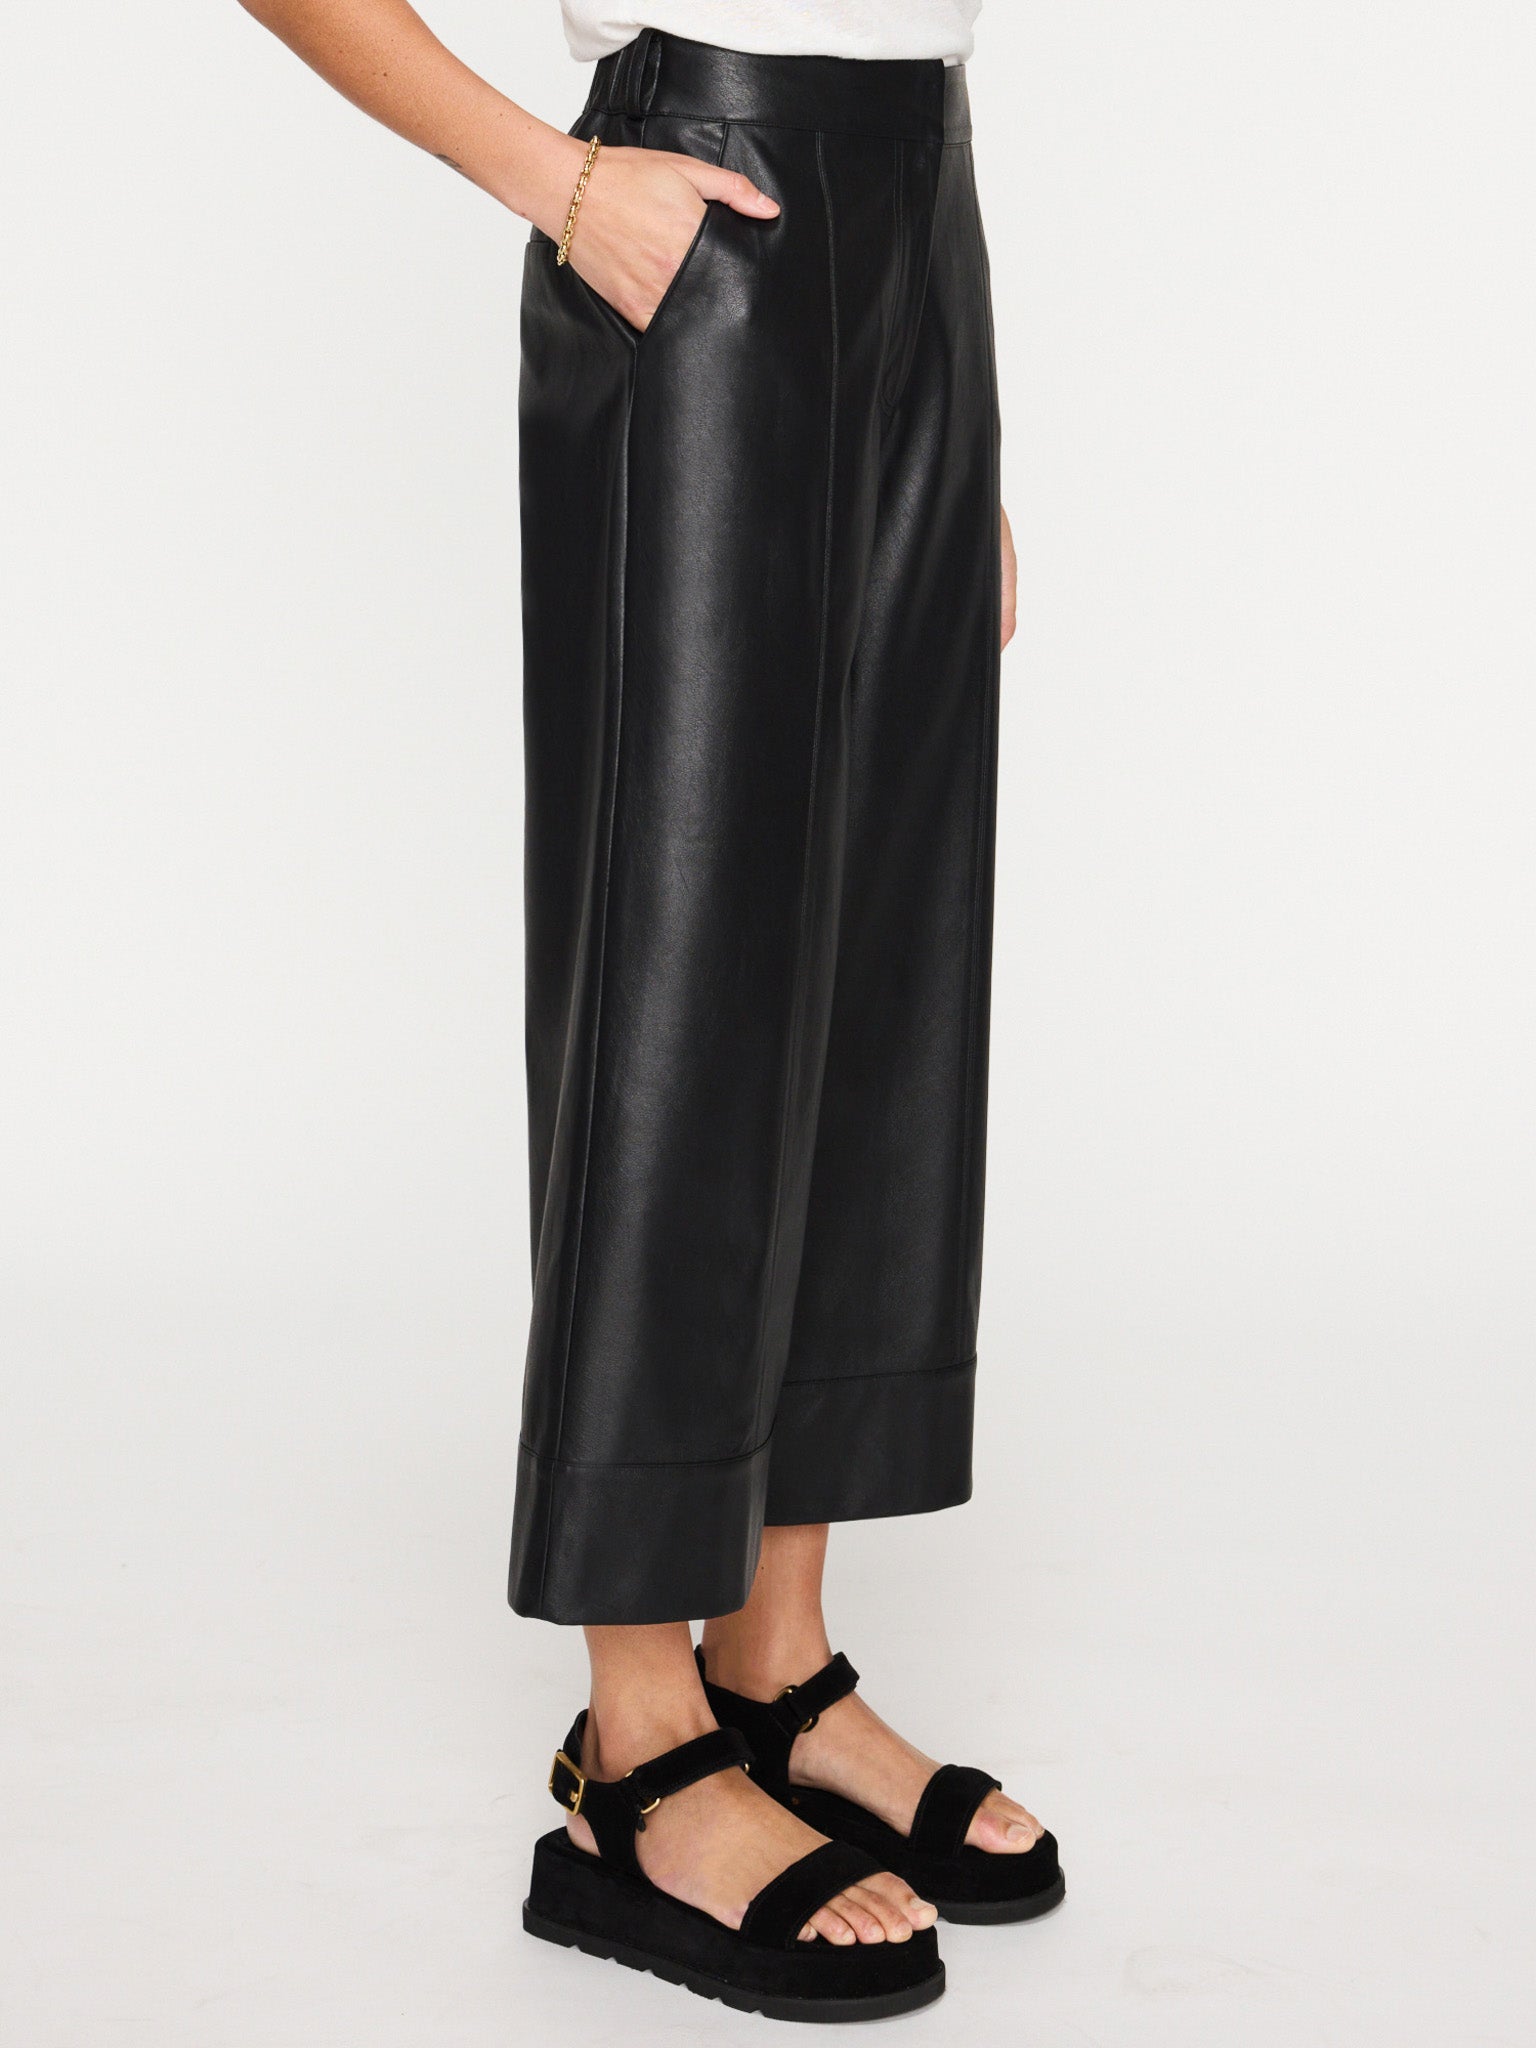 Odele black cropped wide-leg pant side view